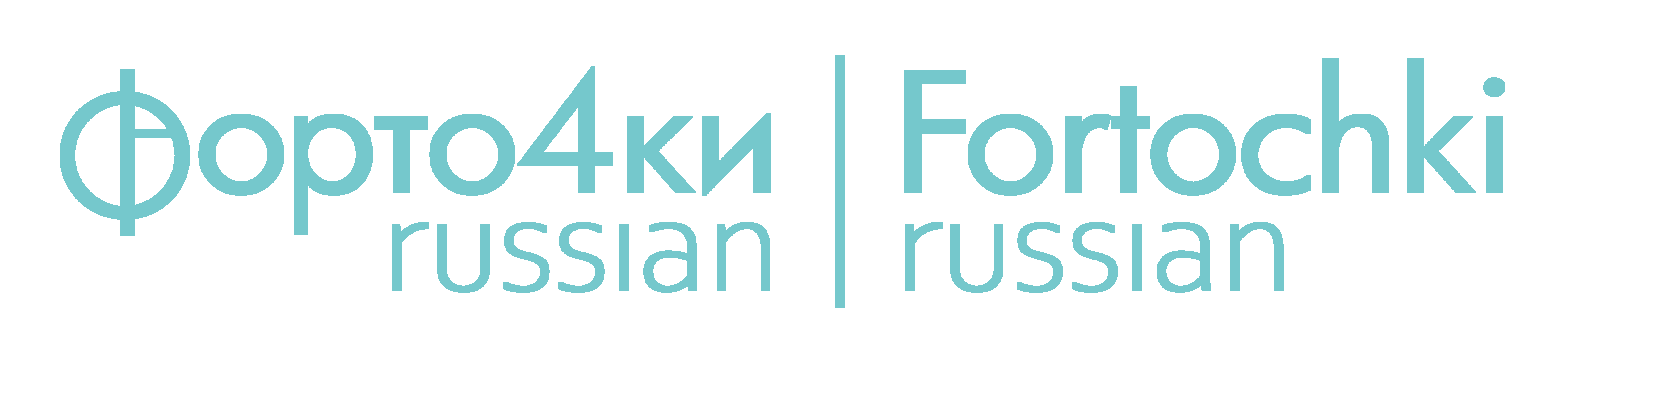 Fortochki Russian